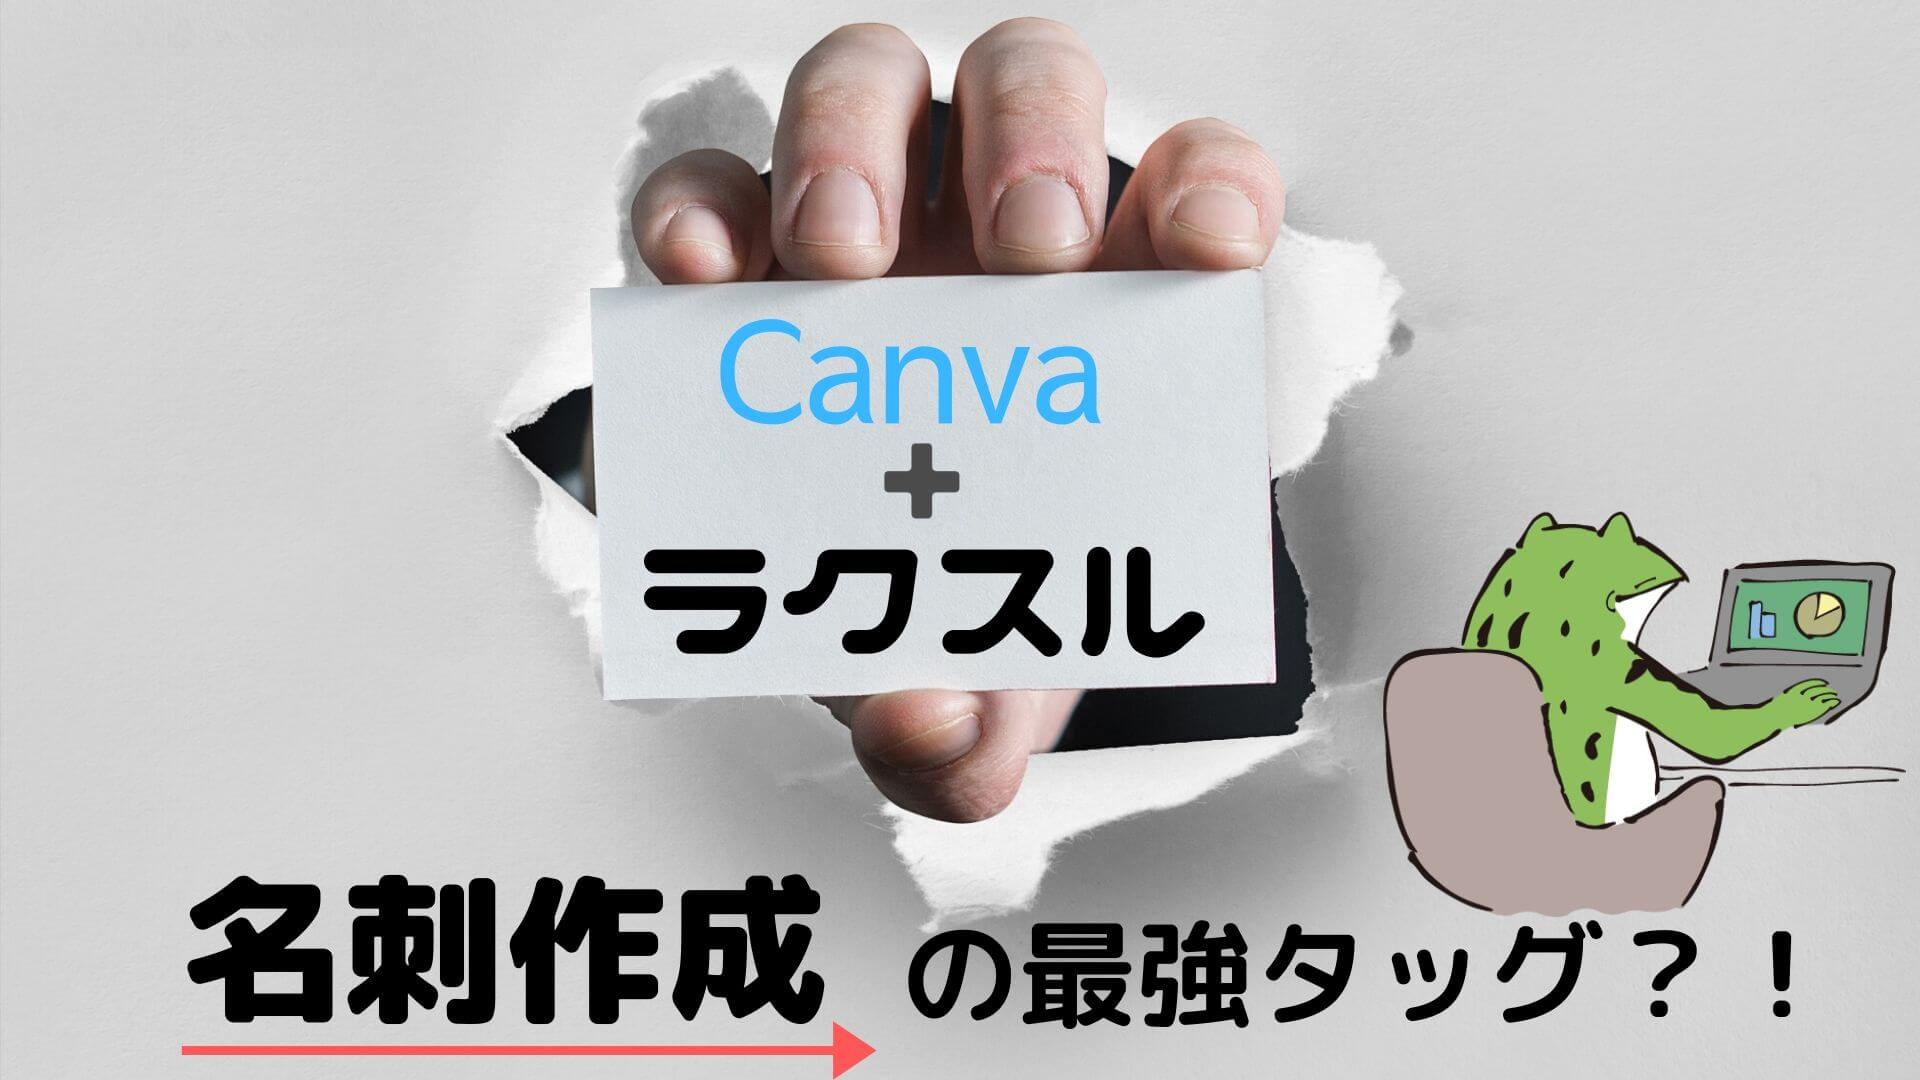 Canva」で名刺デザインを作成して「ラクスル」で注文するのが最強じゃない？【使い方の流れを詳しく】 | 中小企業のギガ総務